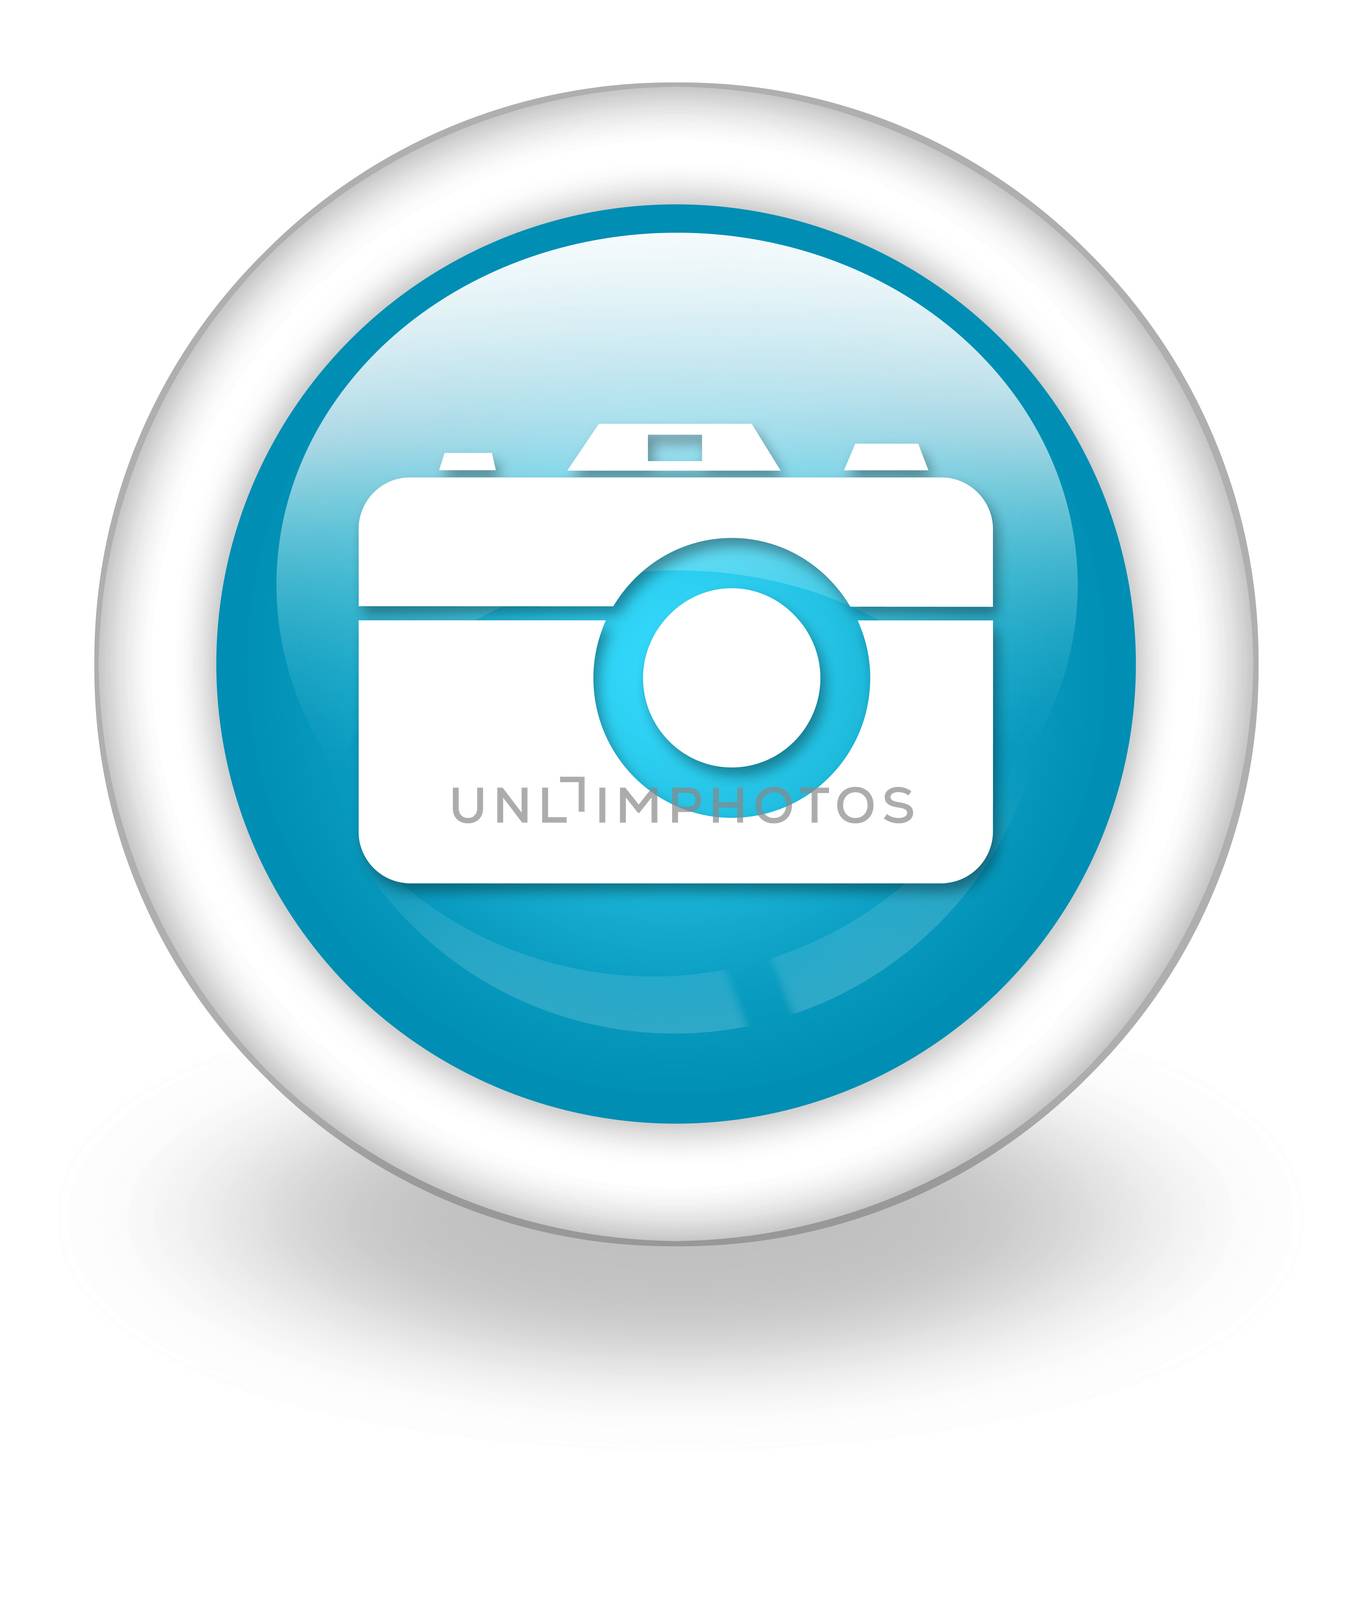 Icon, Button, Pictogram with Camera symbol